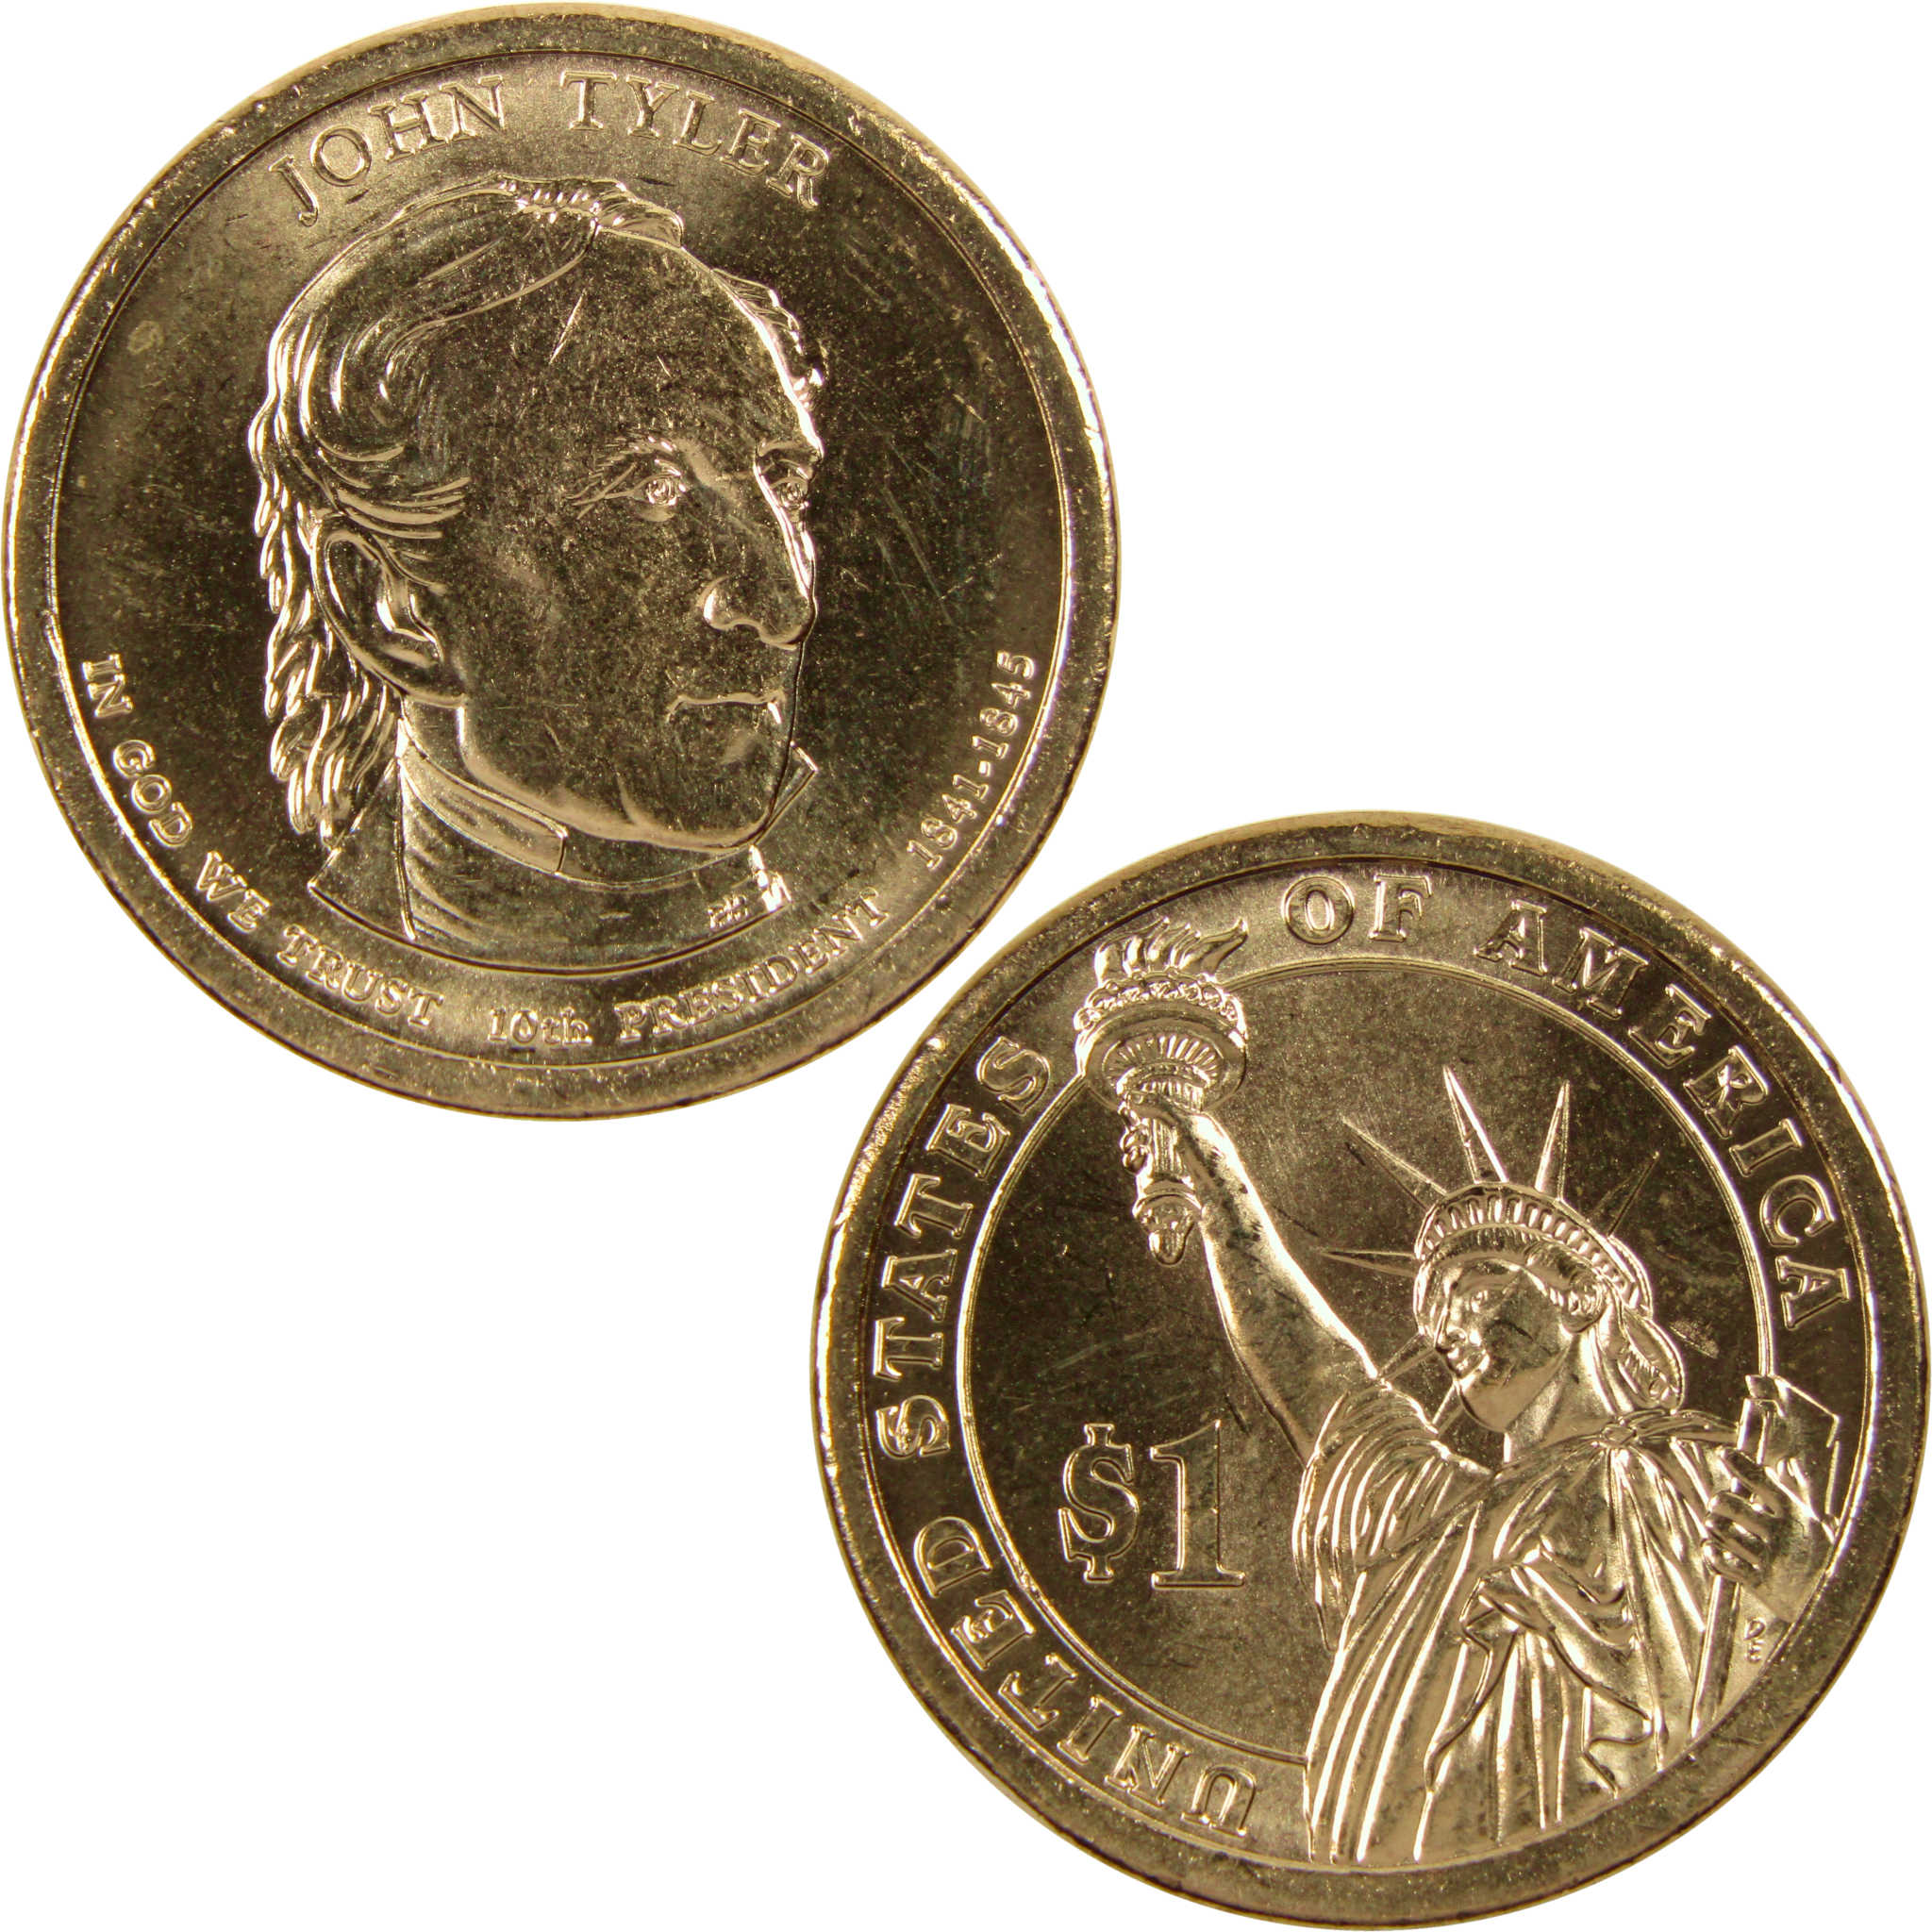 2009 P John Tyler Presidential Dollar BU Uncirculated $1 Coin